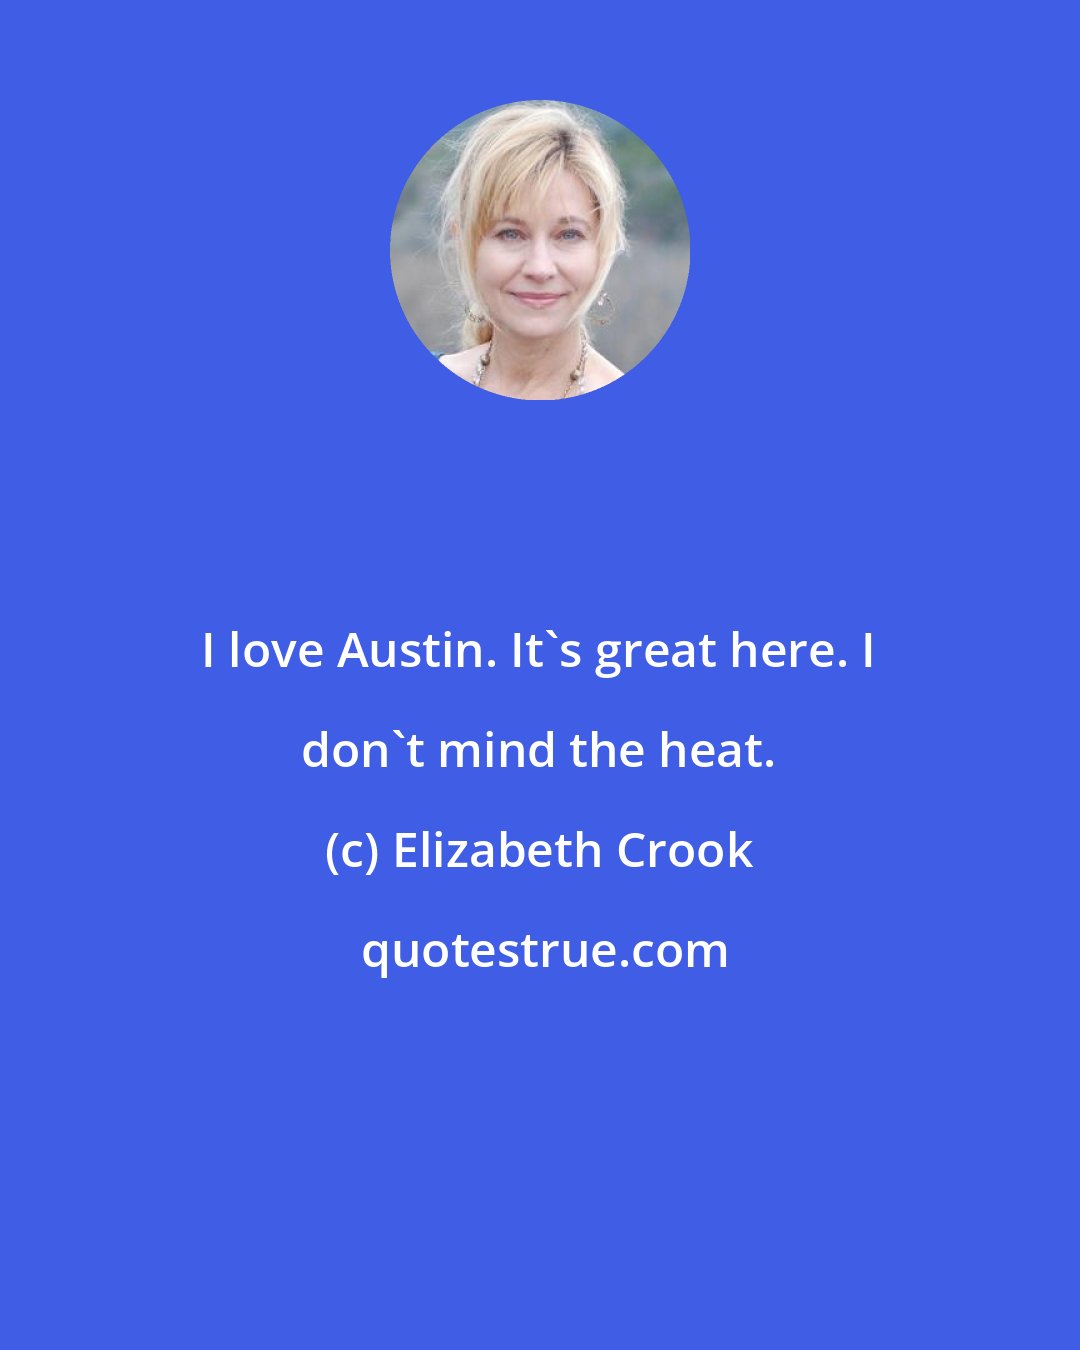 Elizabeth Crook: I love Austin. It's great here. I don't mind the heat.